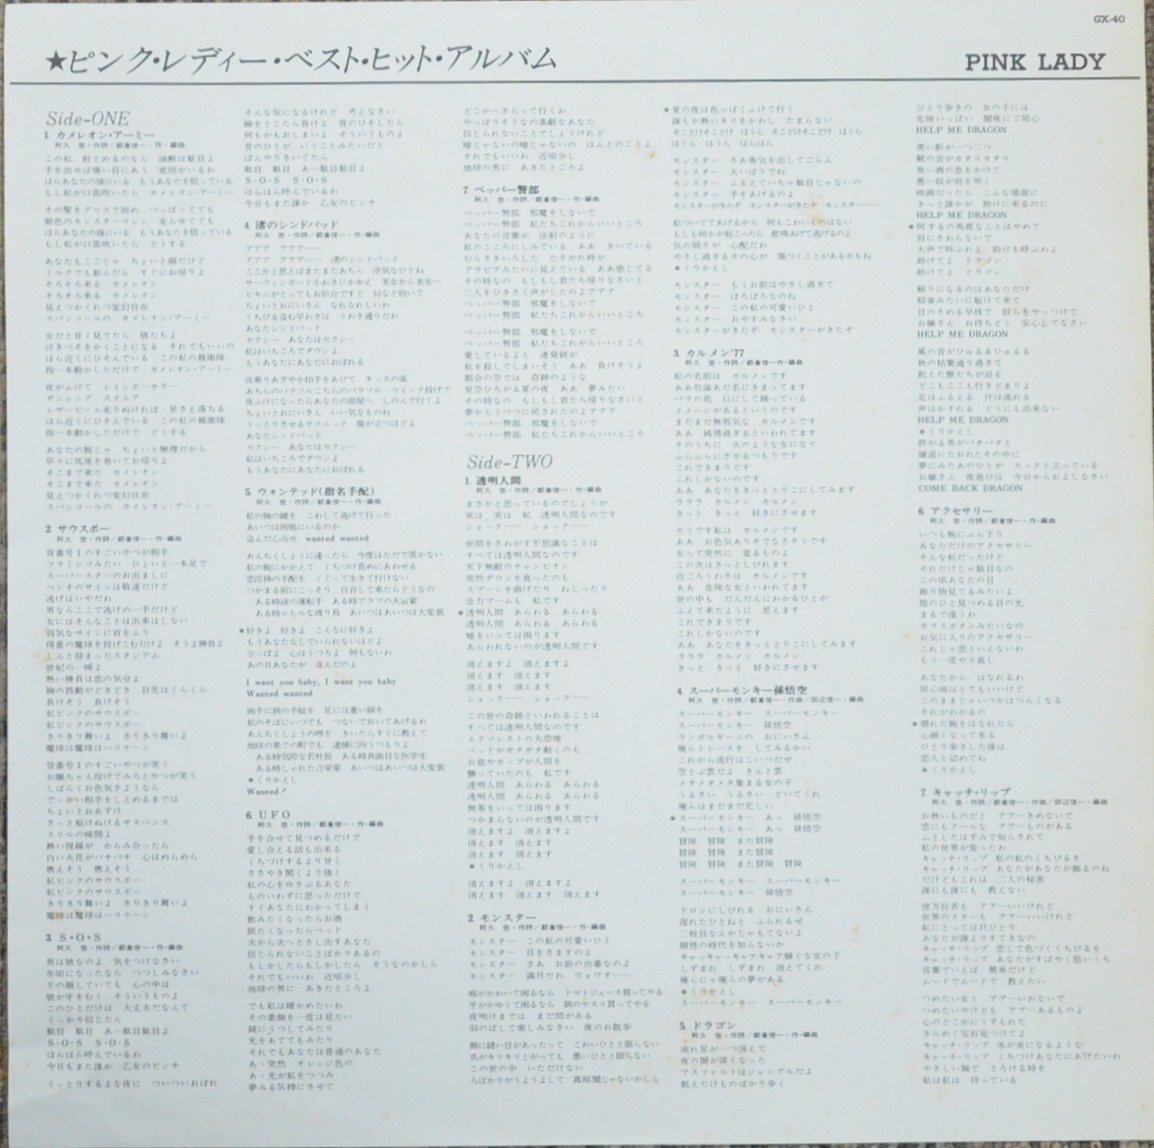 PINK LADY ピンク・レディー / ベスト・ヒット・アルバム BEST HIT ALBUM (LP) - HIP TANK RECORDS